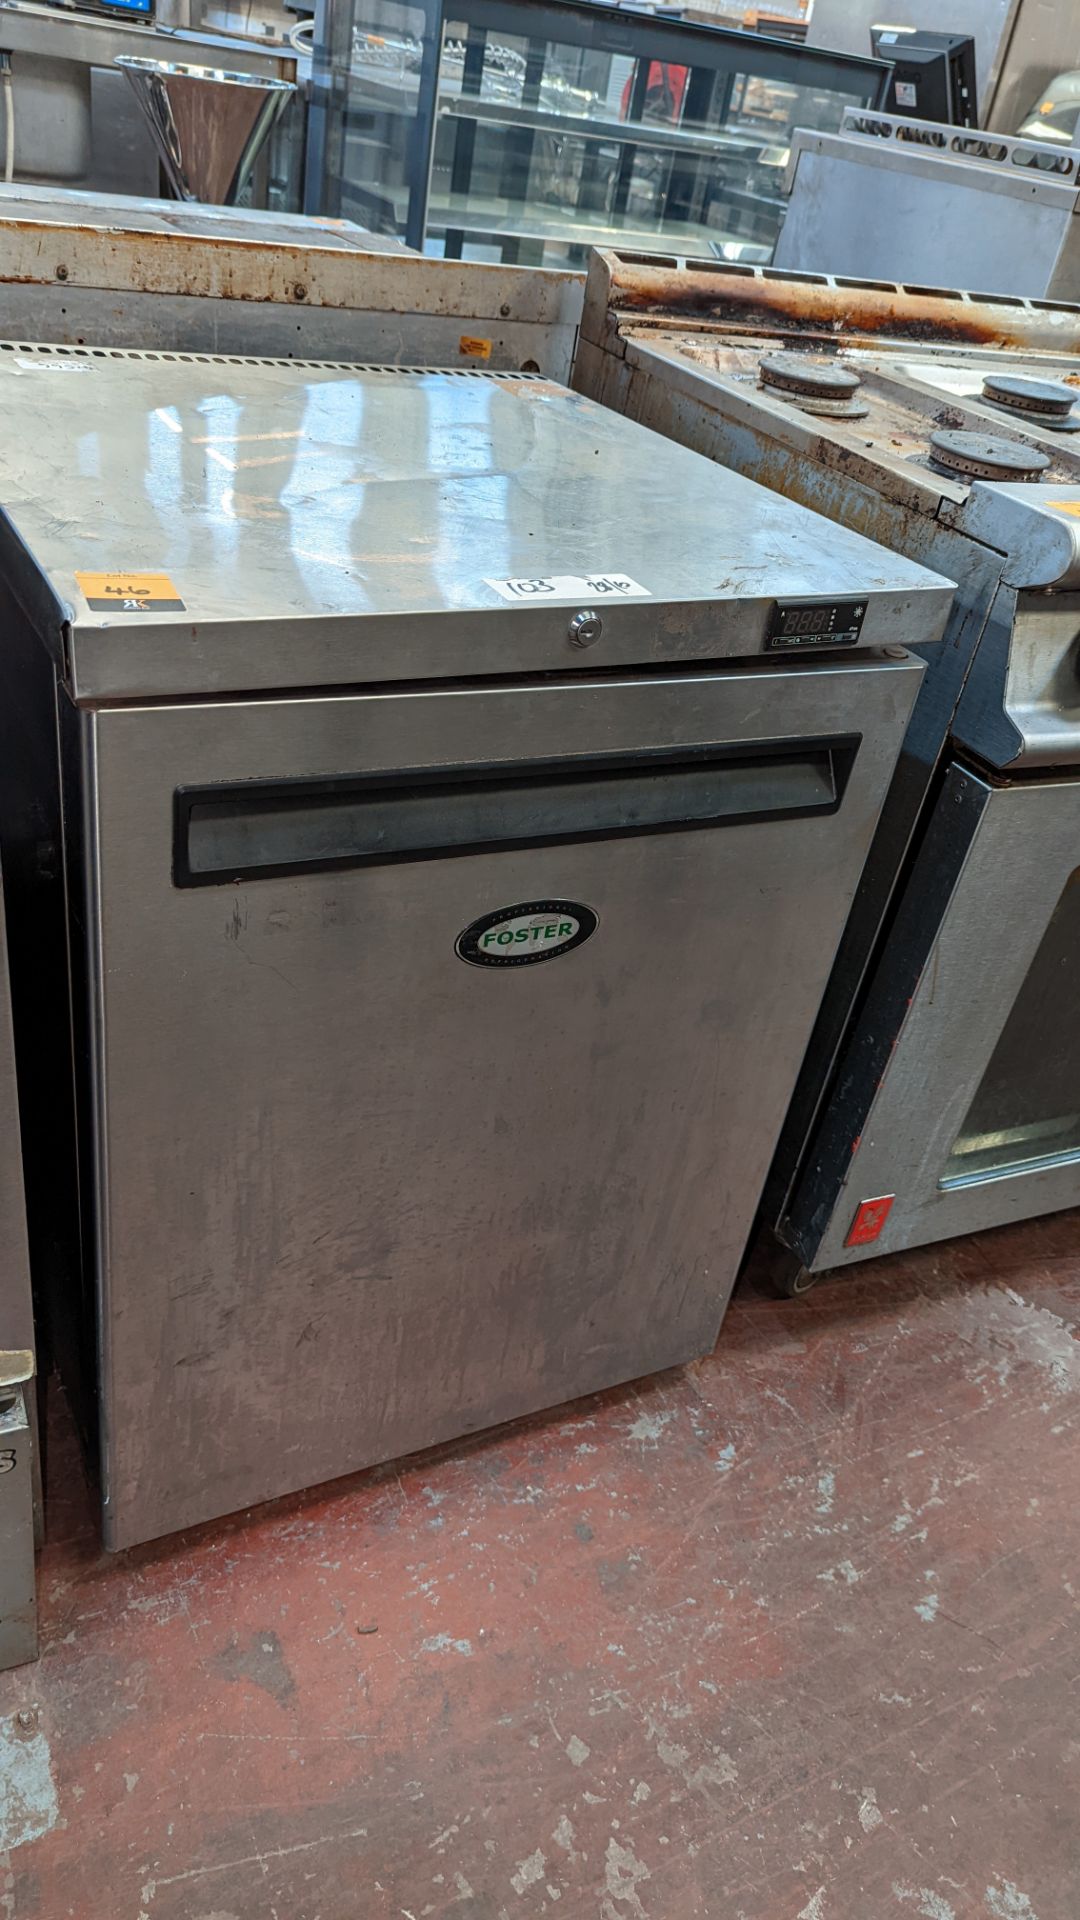 Foster stainless steel under counter fridge model HR150-A